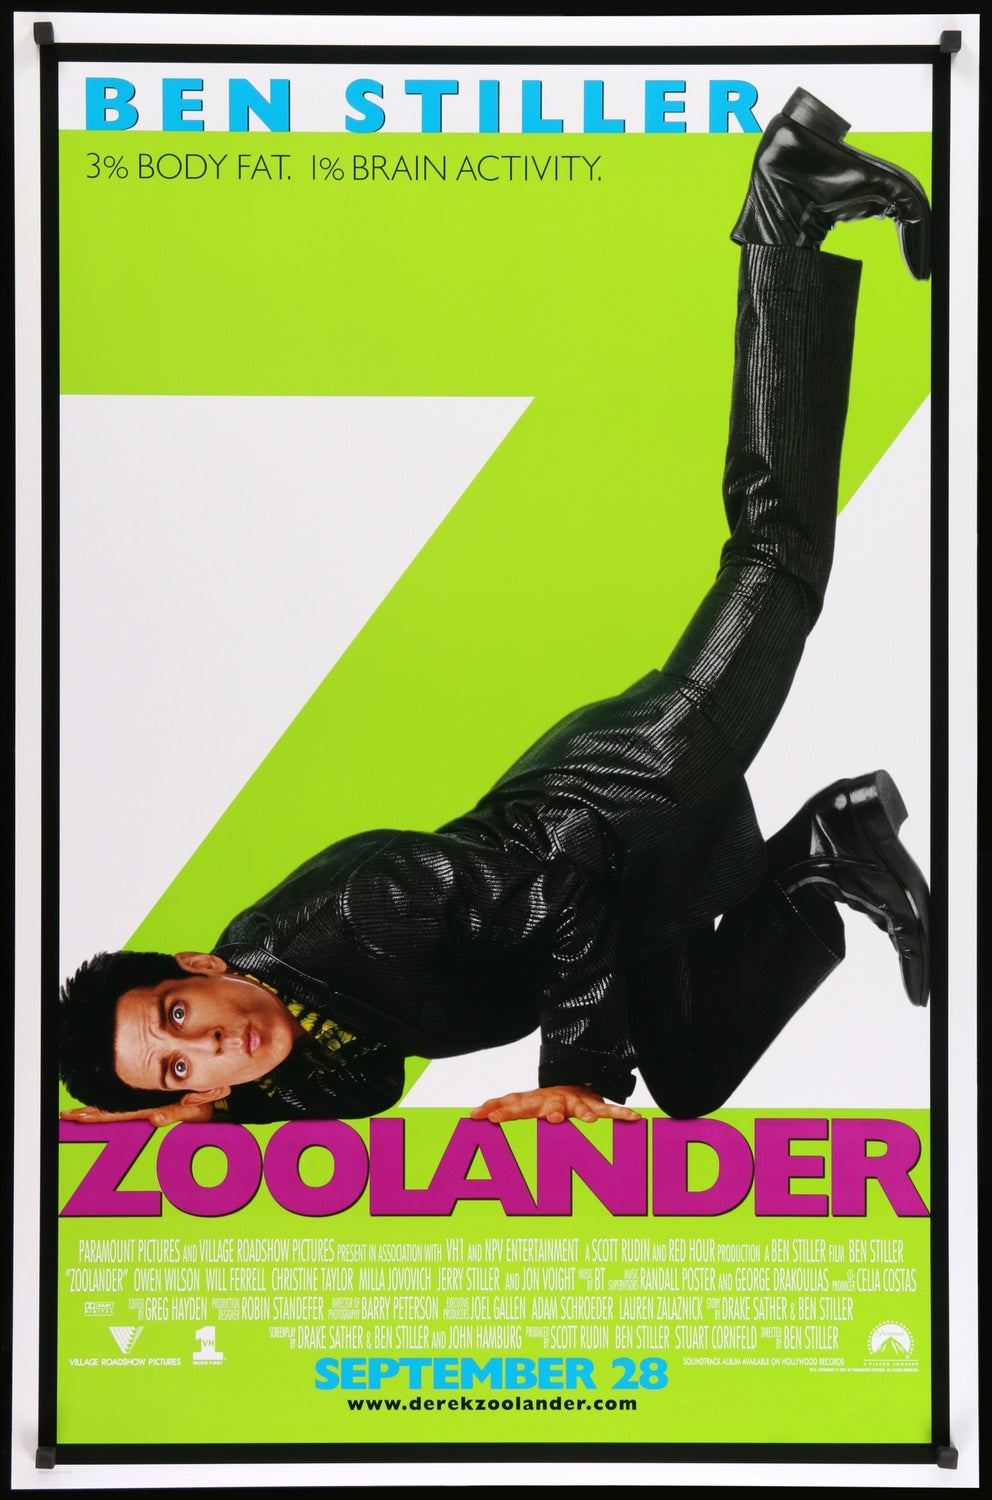 Zoolander (2001) original movie poster for sale at Original Film Art